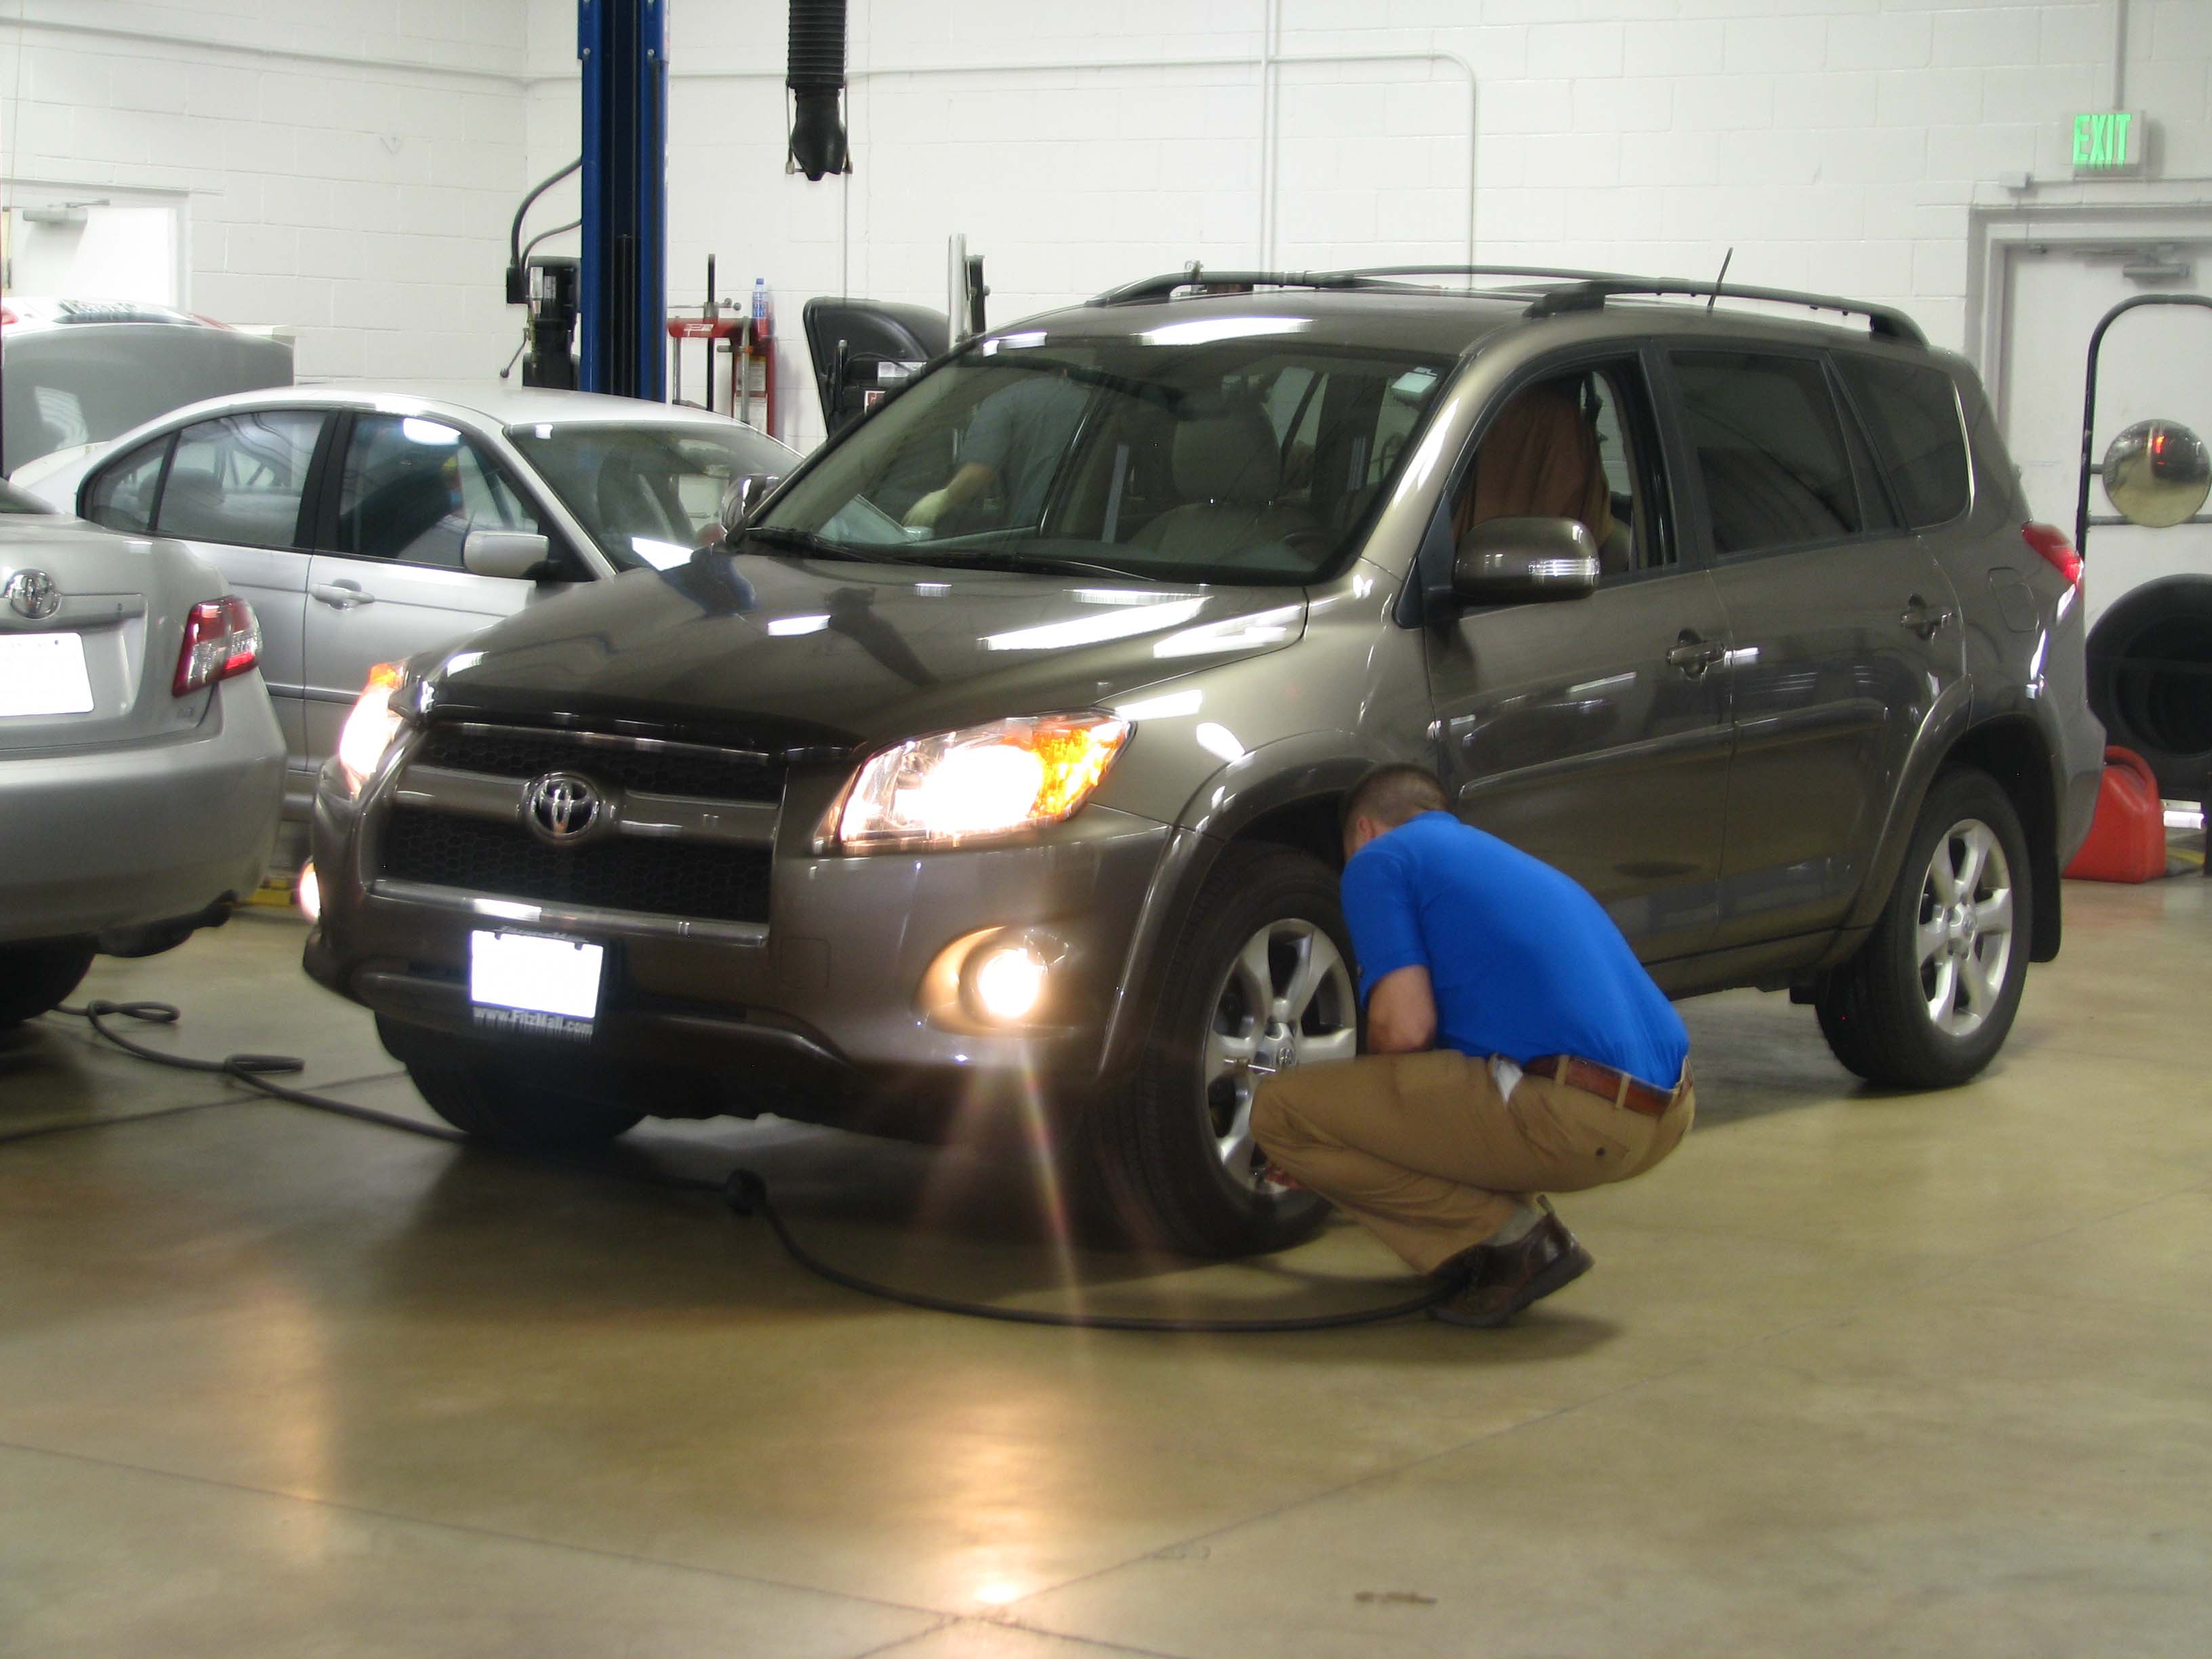 Brady_Checking_the_Tire_Pressure_on_a_Toyota.jpg